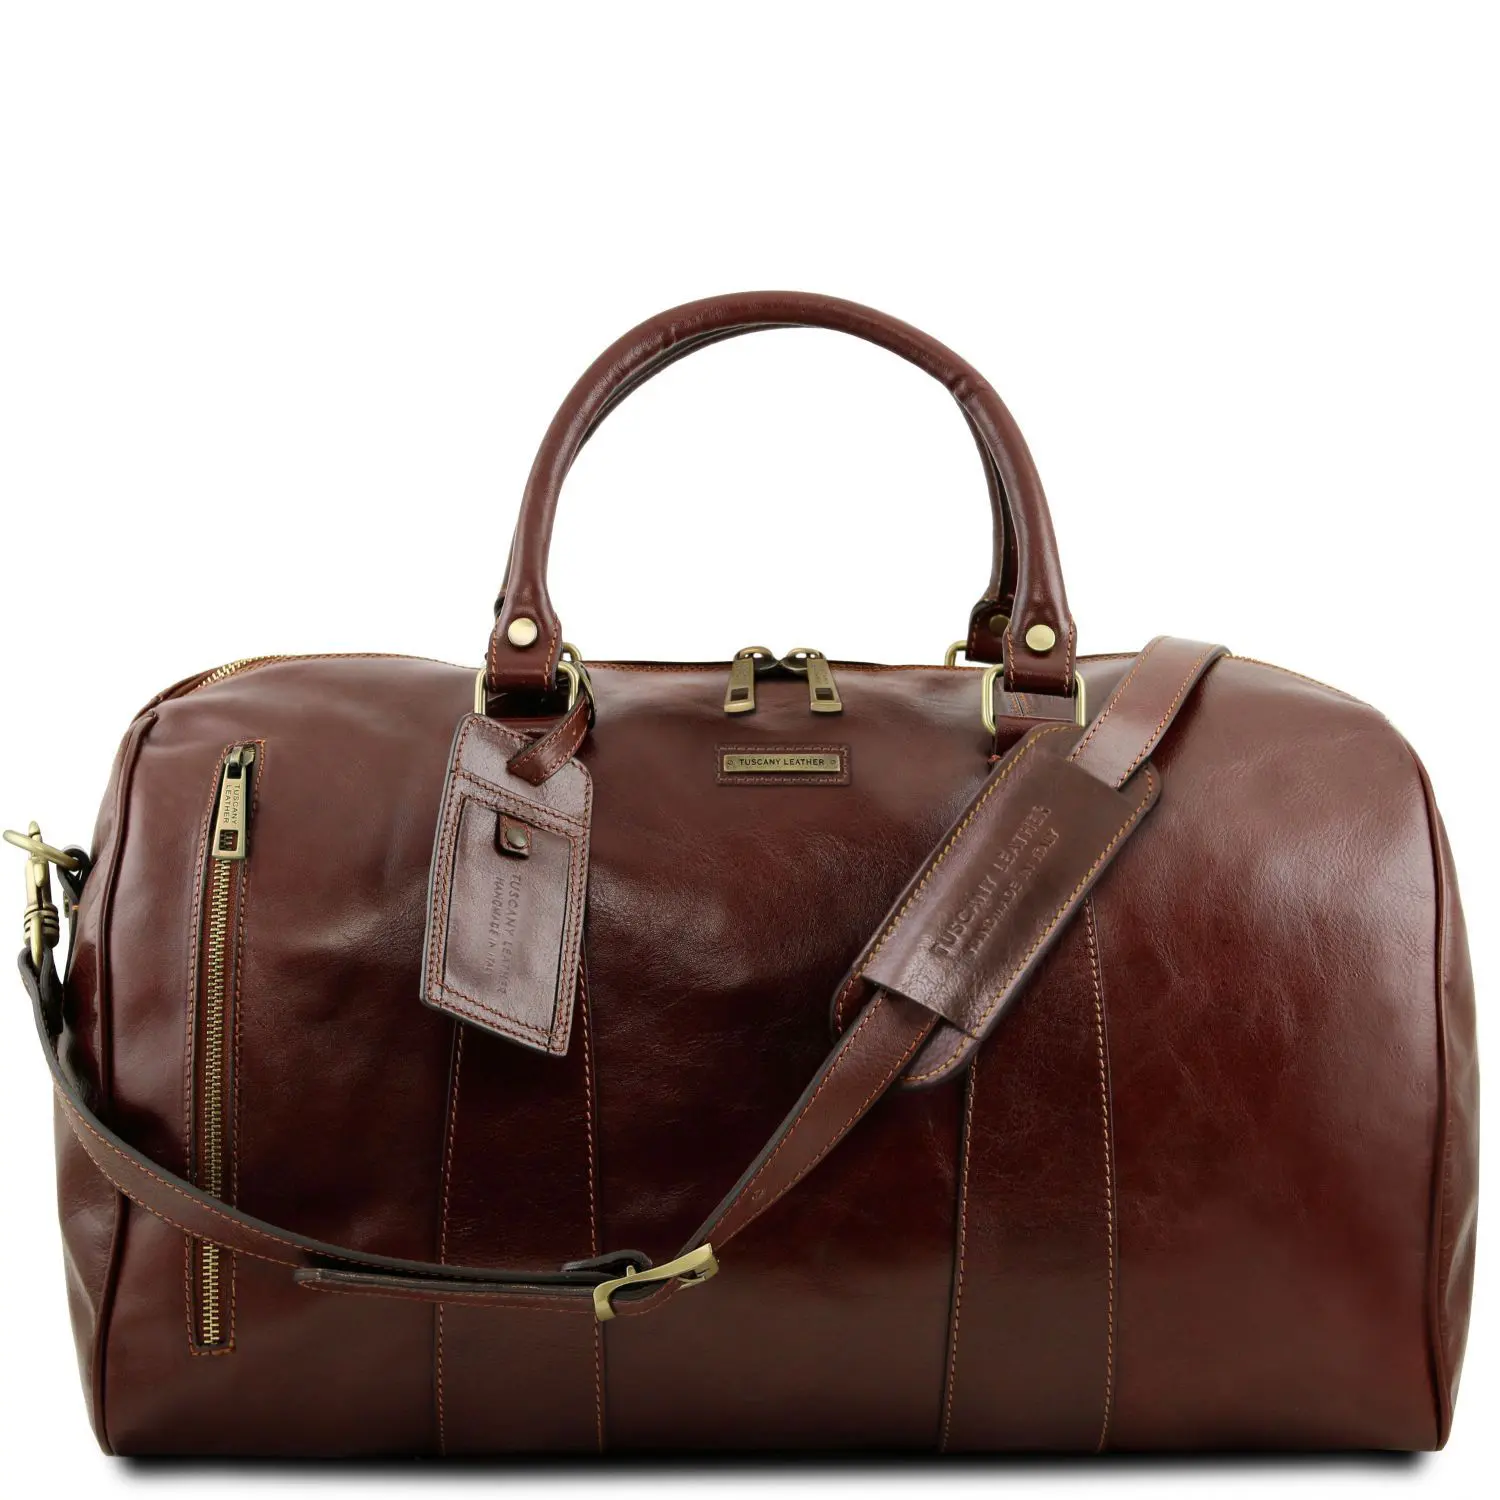 royal travel bag leather